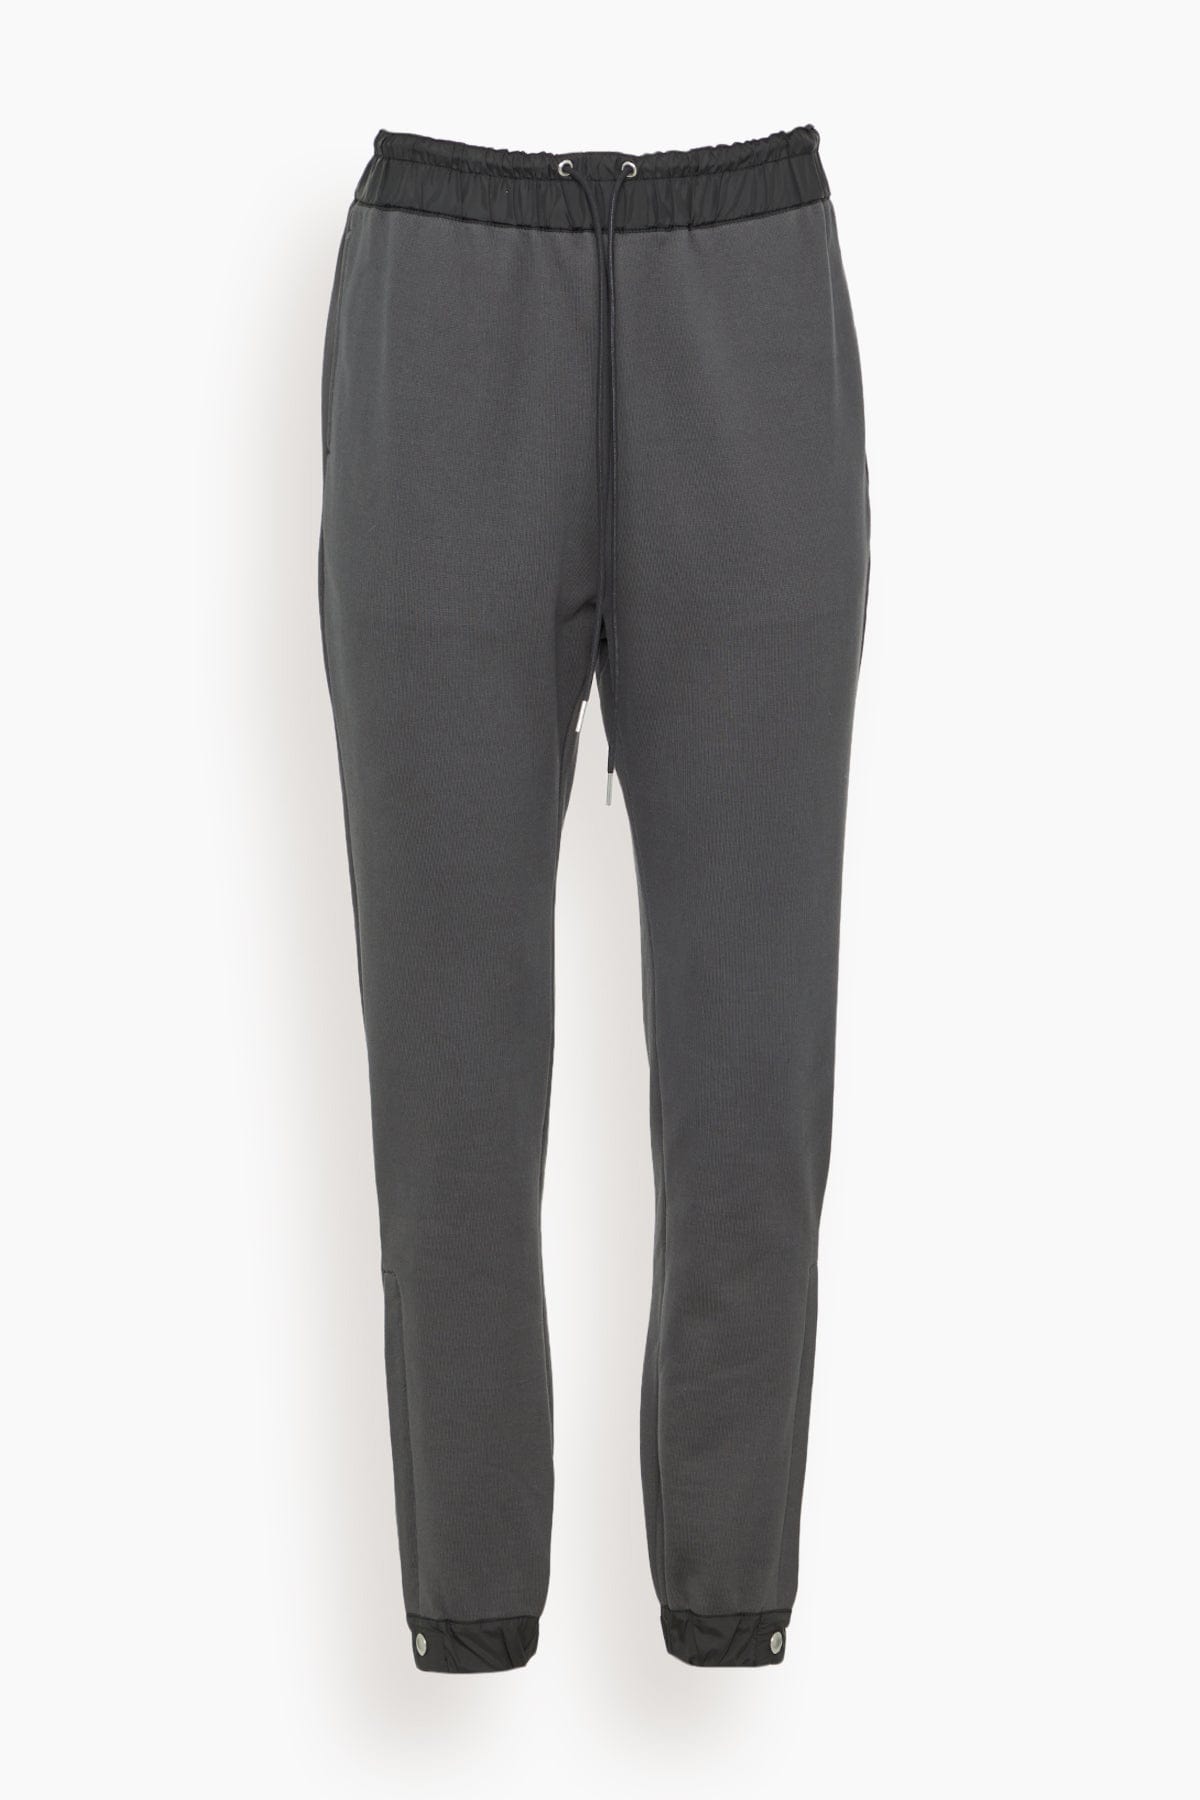 Sacai Pants Sweat Jersey Pants in Charcoal Gray